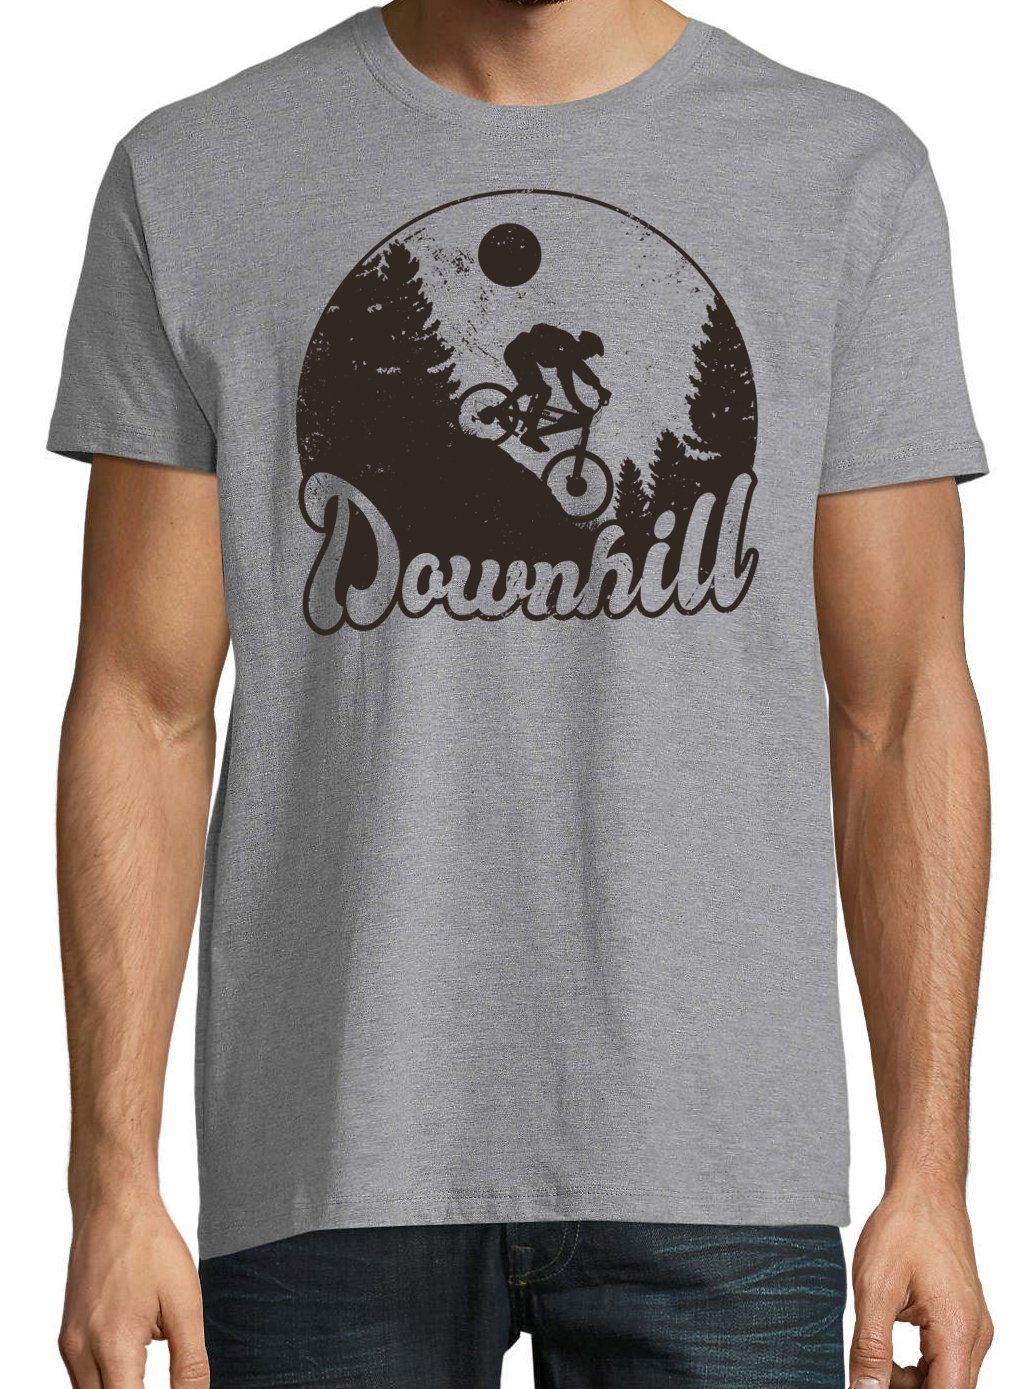 Downhill trendigem Shirt Bike Grau mit Frontprint Youth Herren T-Shirt Designz